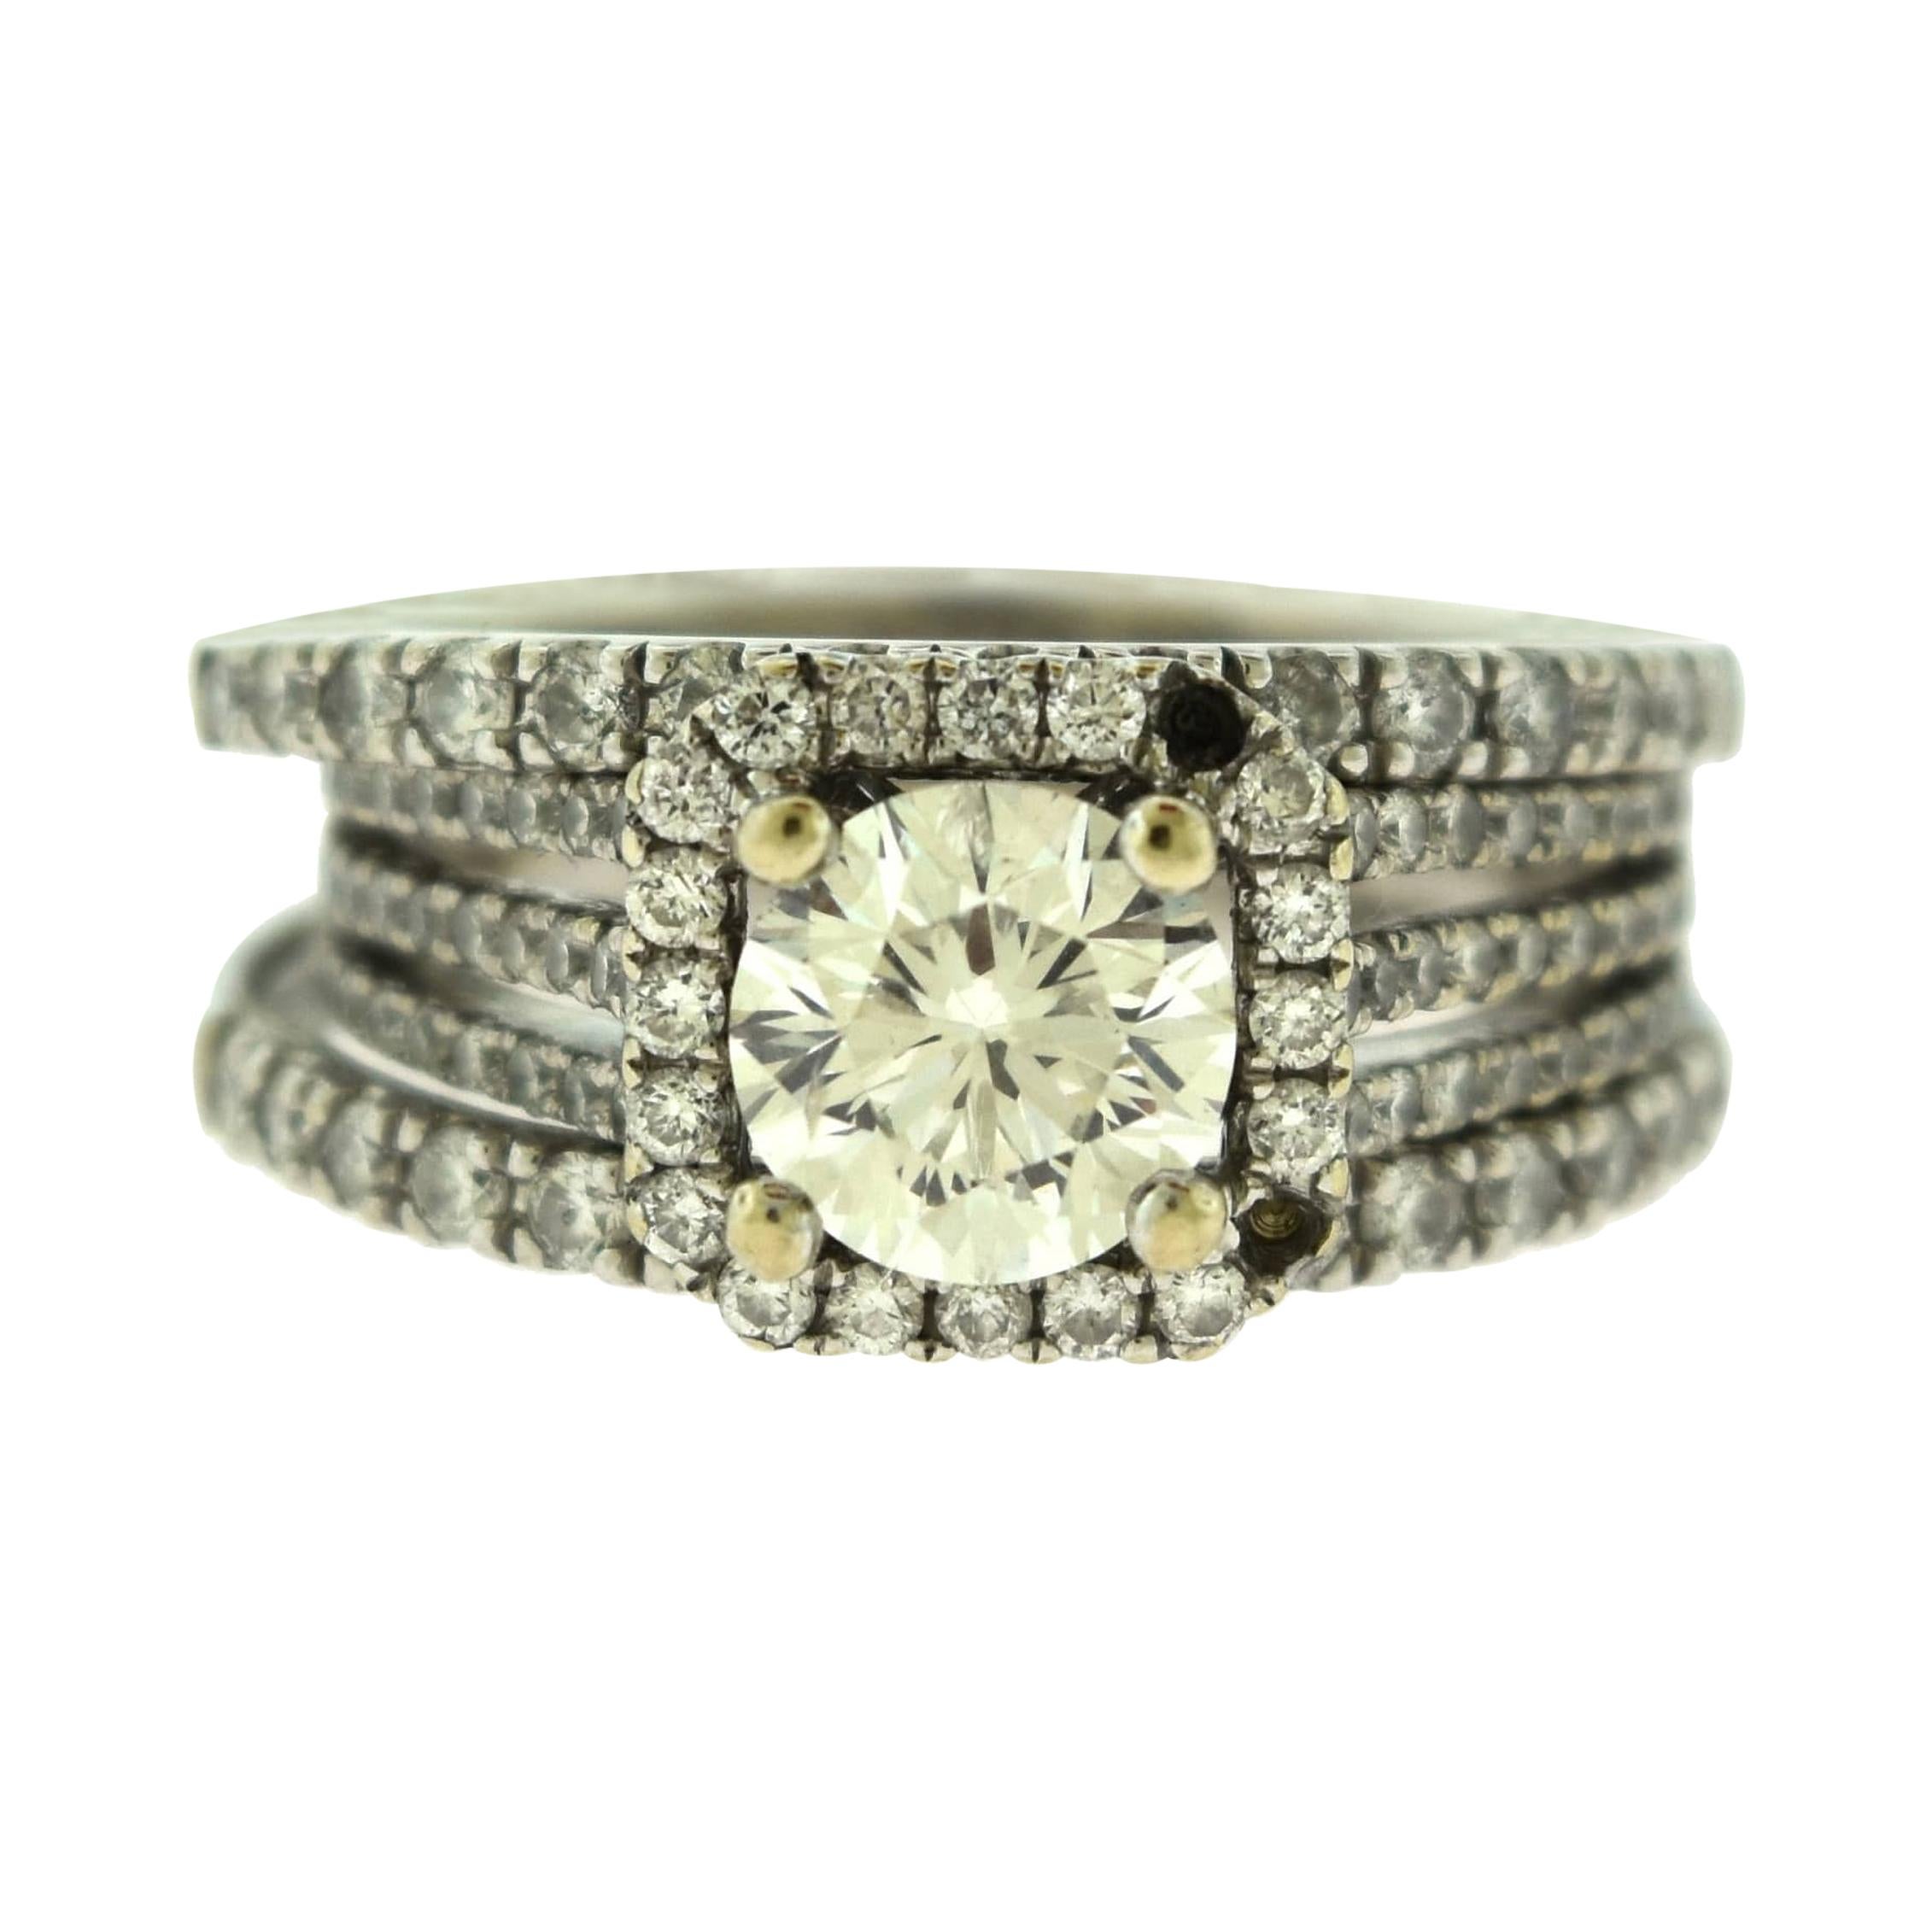 Multi-Layered Brilliant Round Diamond Halo Engagement Ring in White Gold